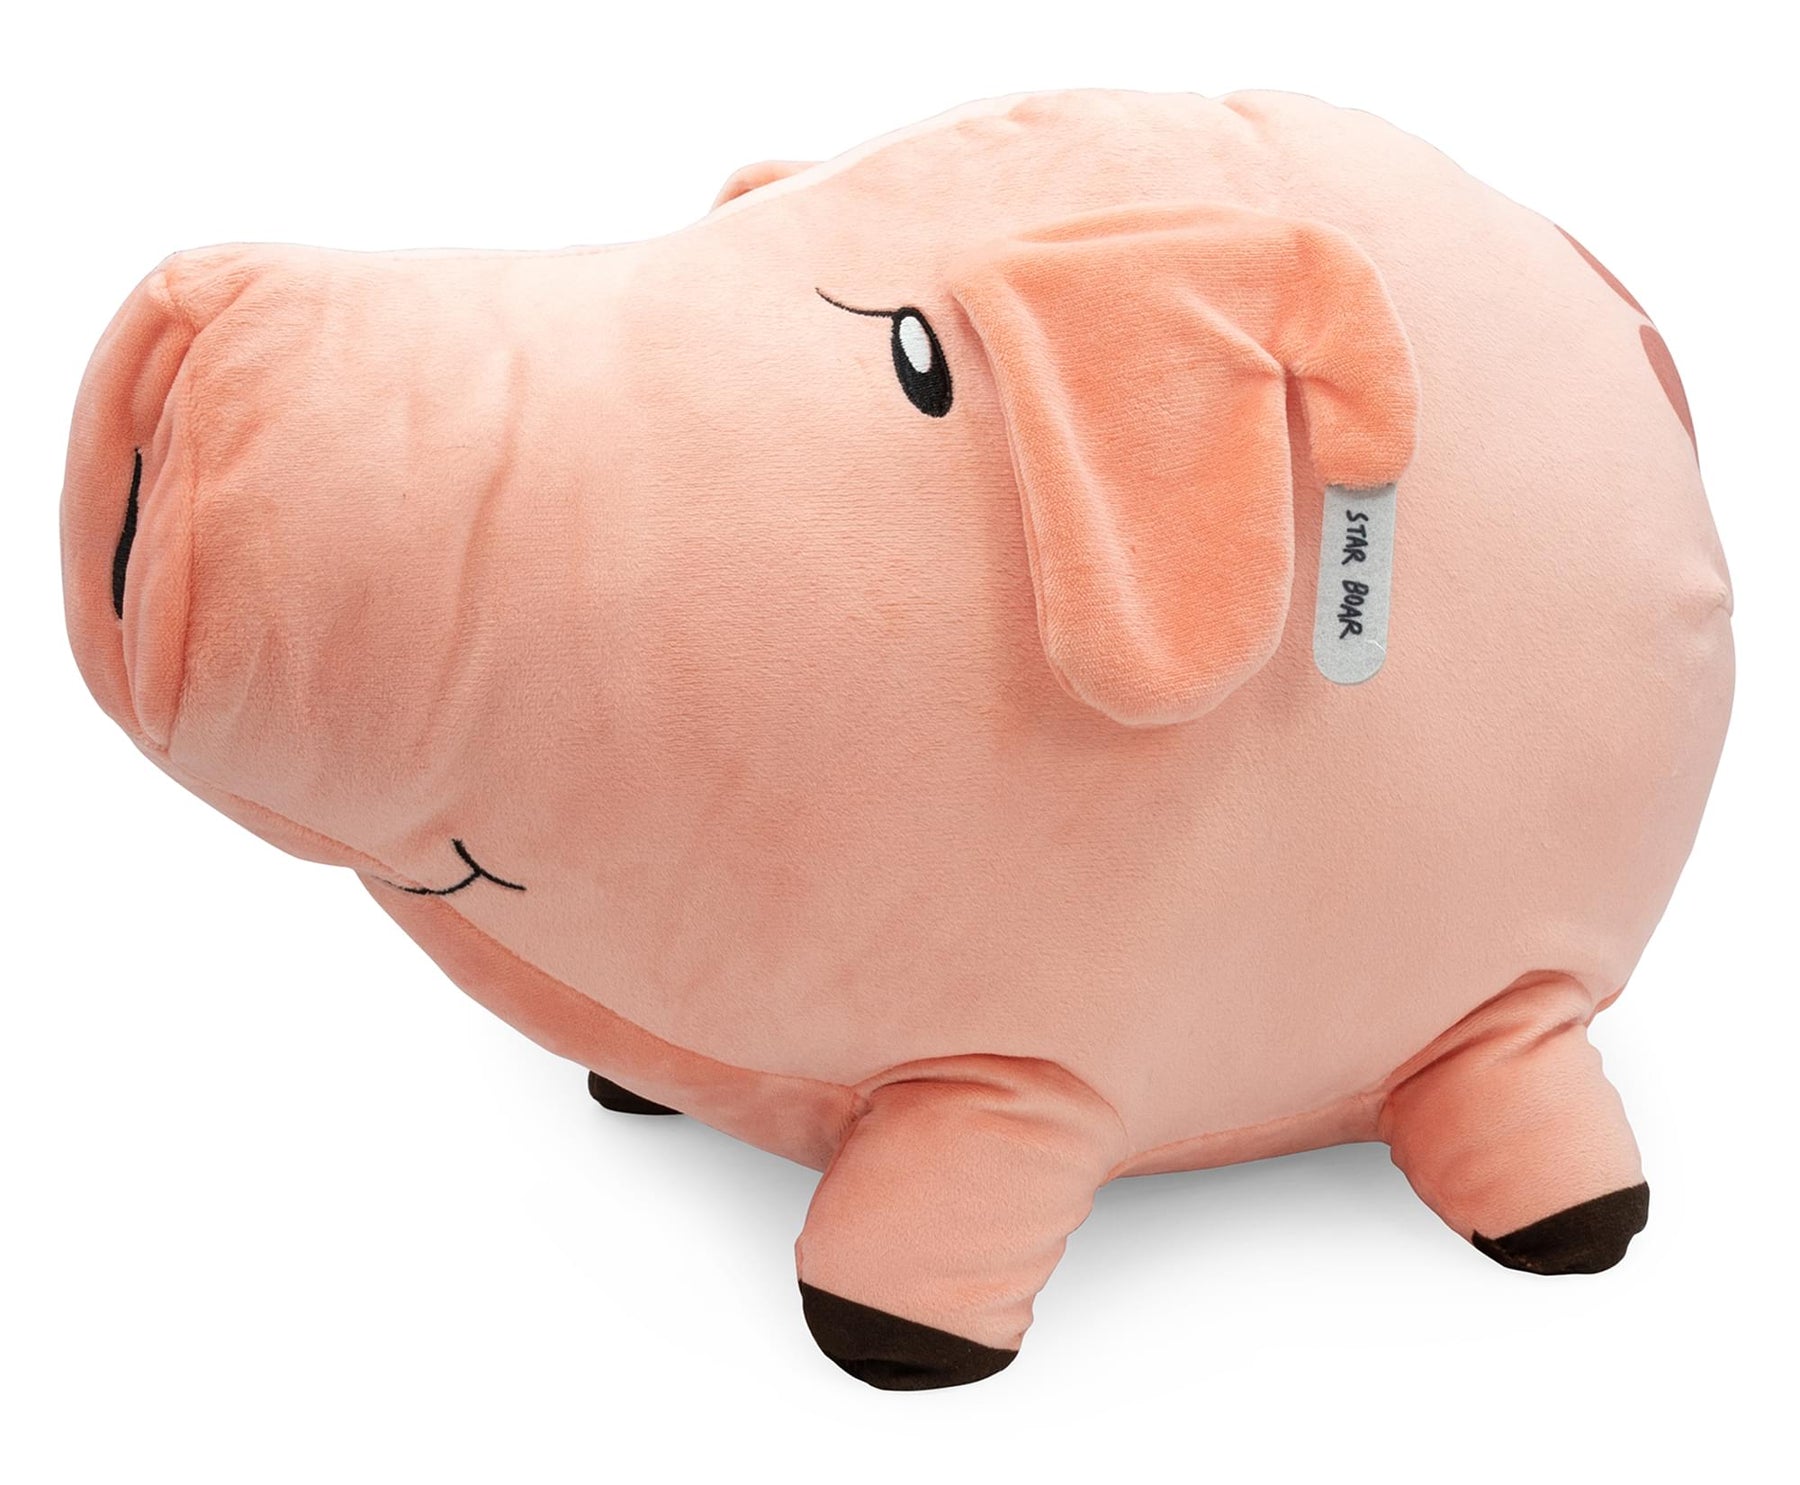 Minecraft pig plush • Magic Plush